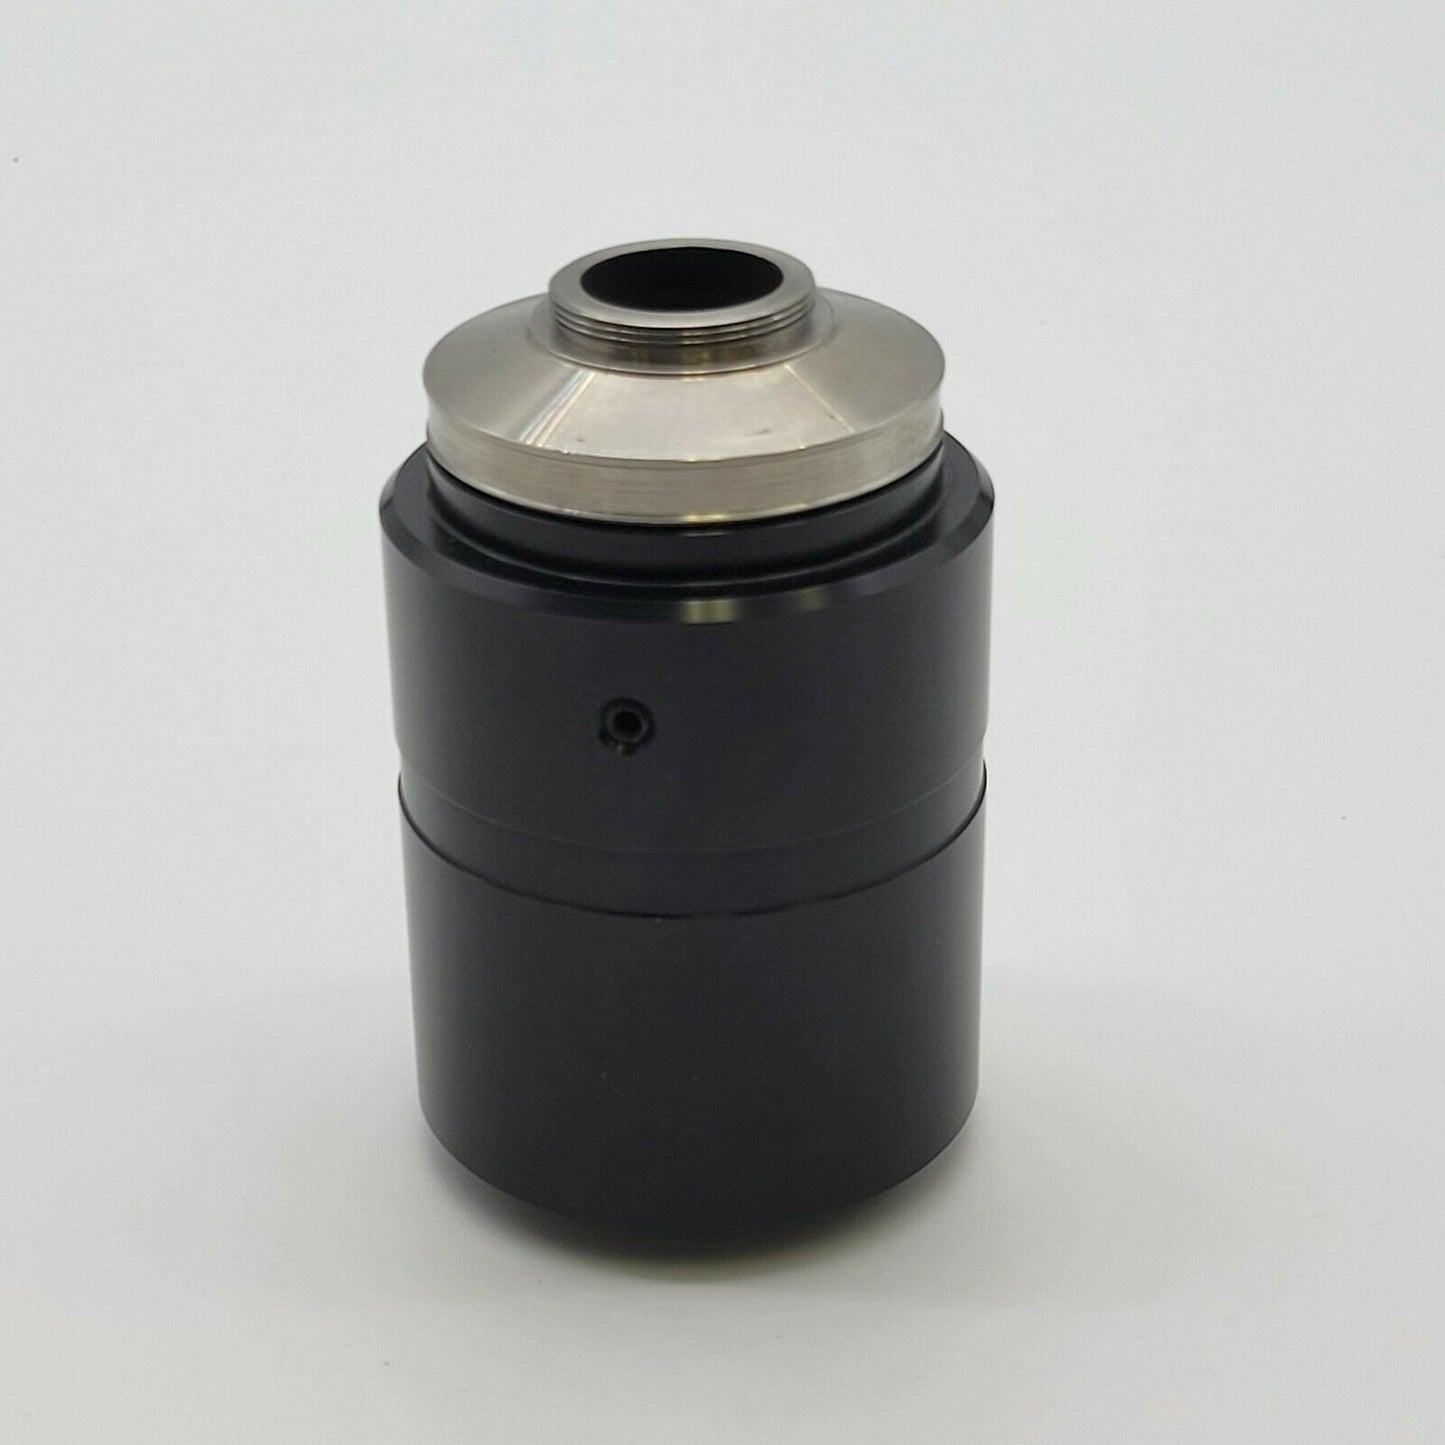 Optem Microscope Camera Adapter 1x DC10OU - microscopemarketplace